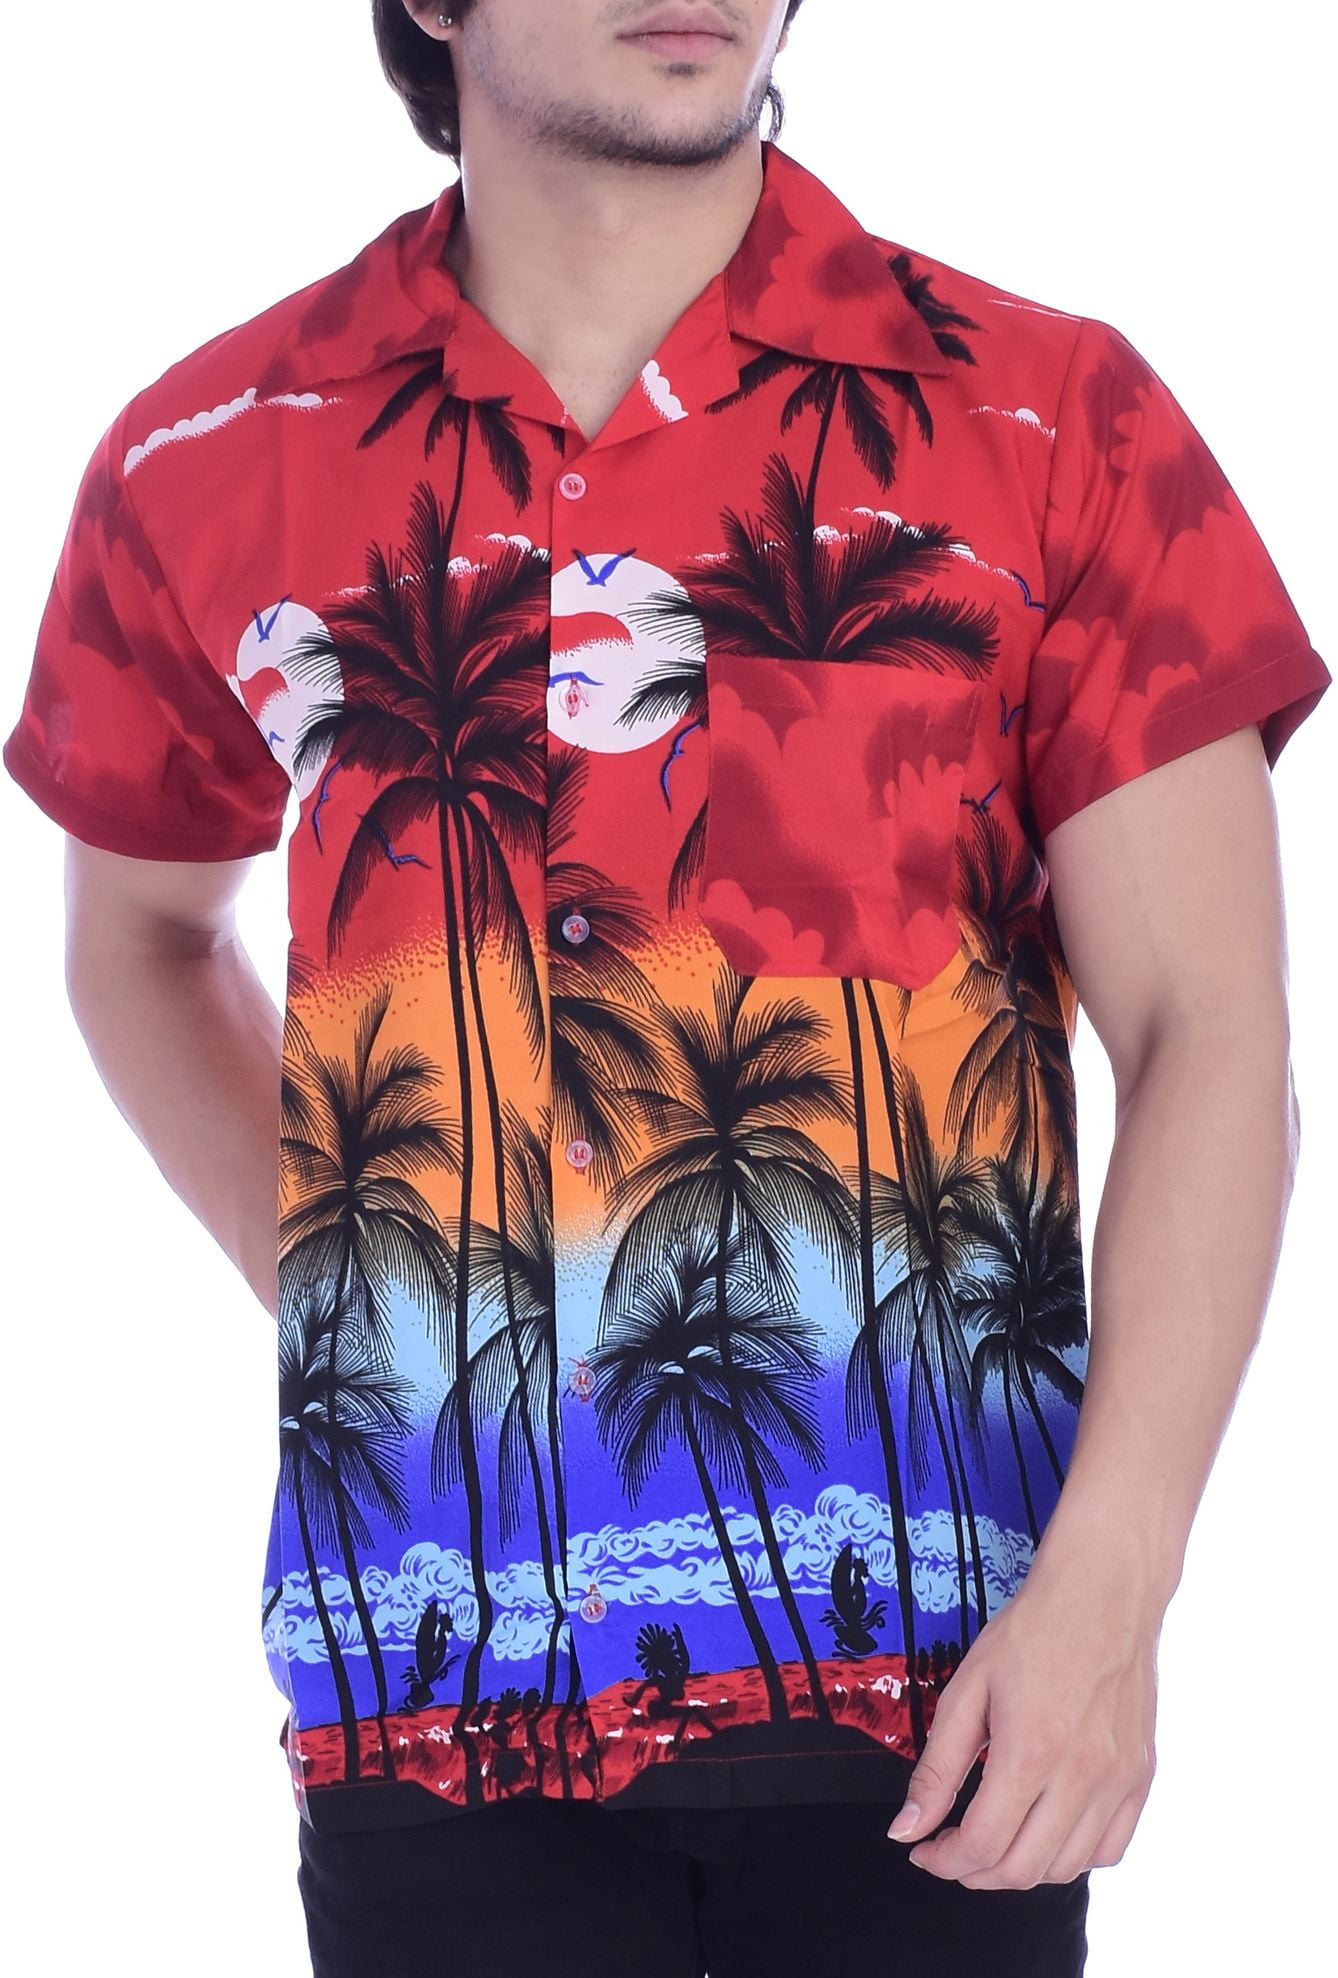 VSSSJ Hawaiian Shirts for Big and Tall Men Casual Button Down Short Sleeve  Lapel TShirts Tropical Palm Tree Summer Holiday Beach Tops Khaki XL 